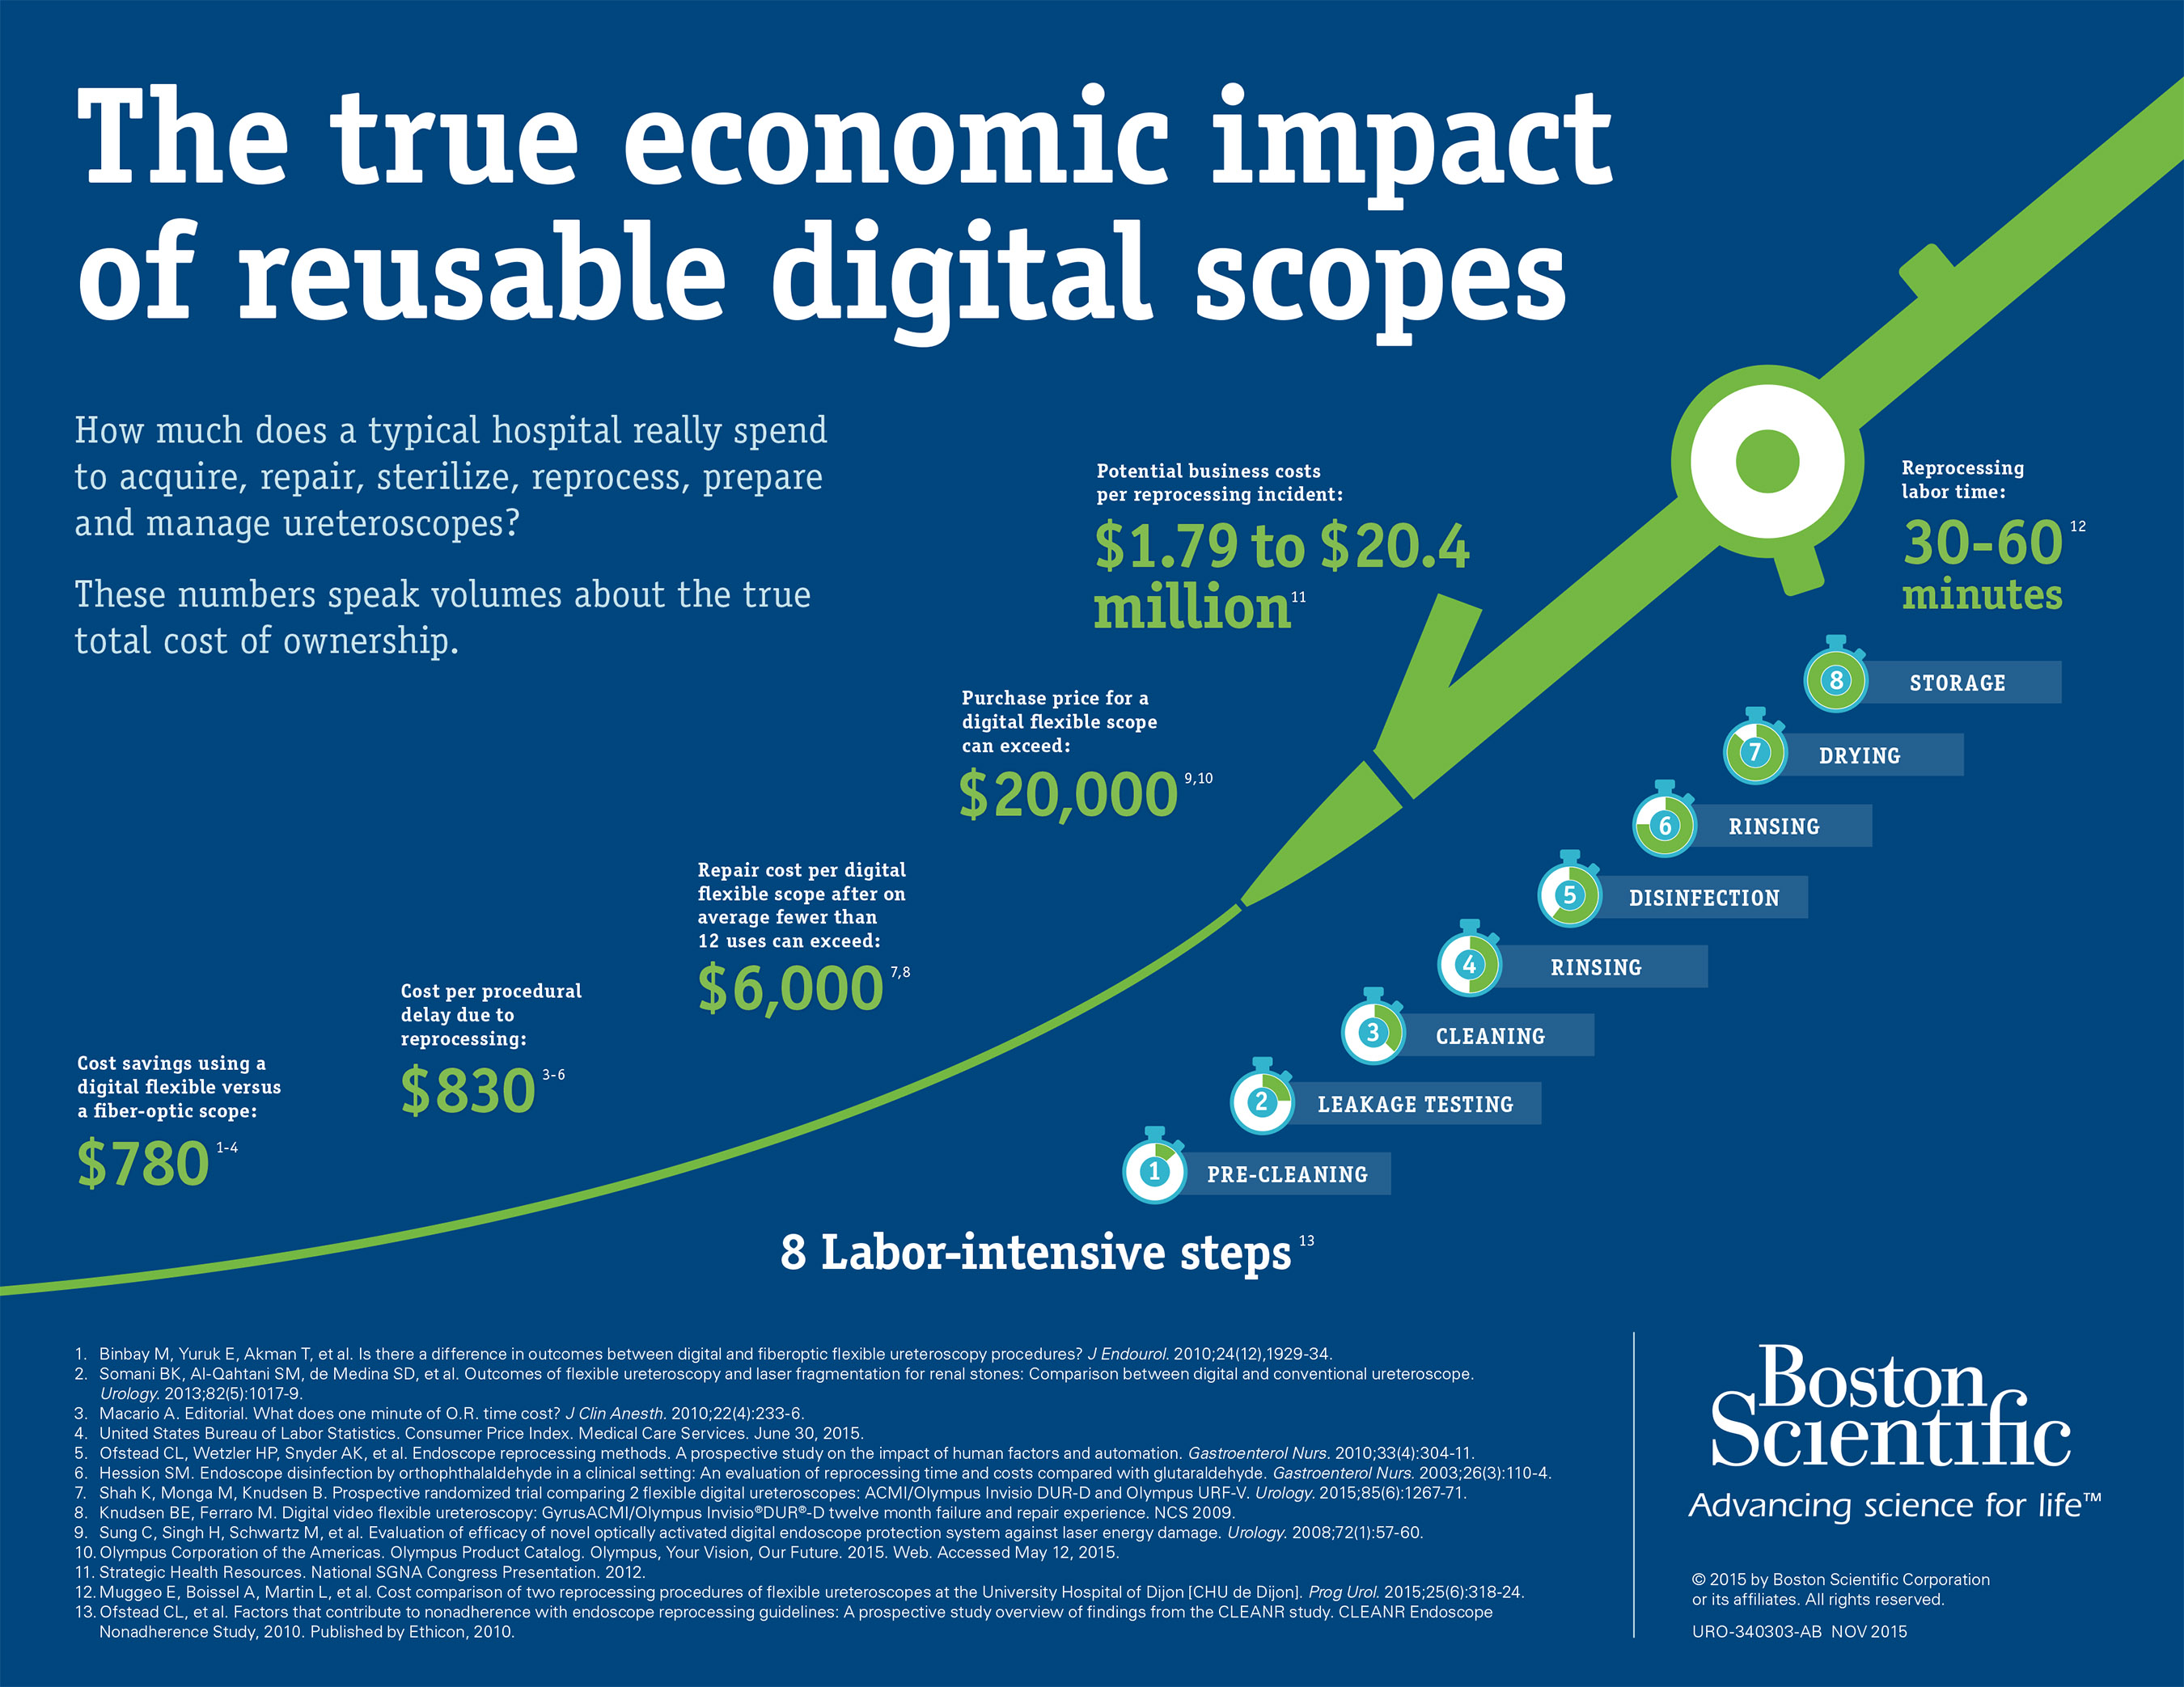 The economic impact of resuable digital scopes